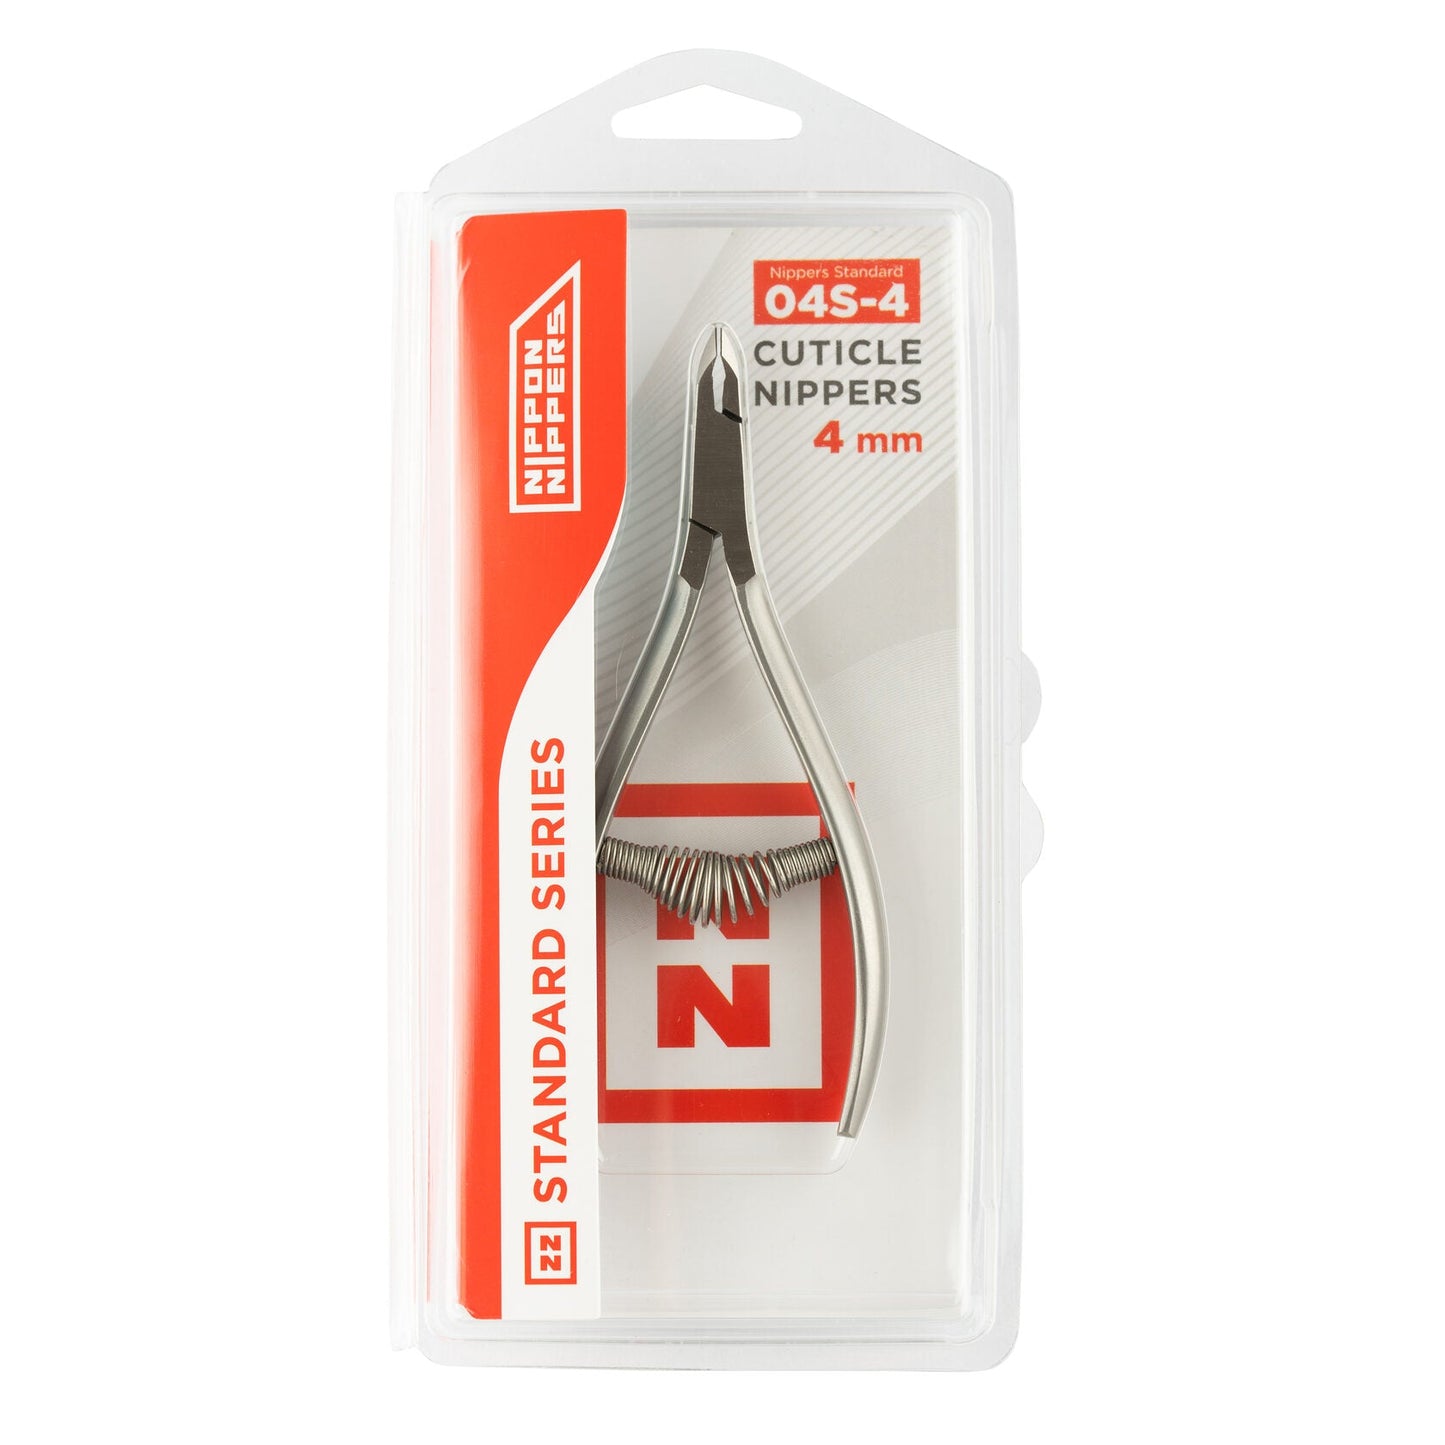 Cuticle nippers Nippon Nippers NS-04S-4 STANDARD